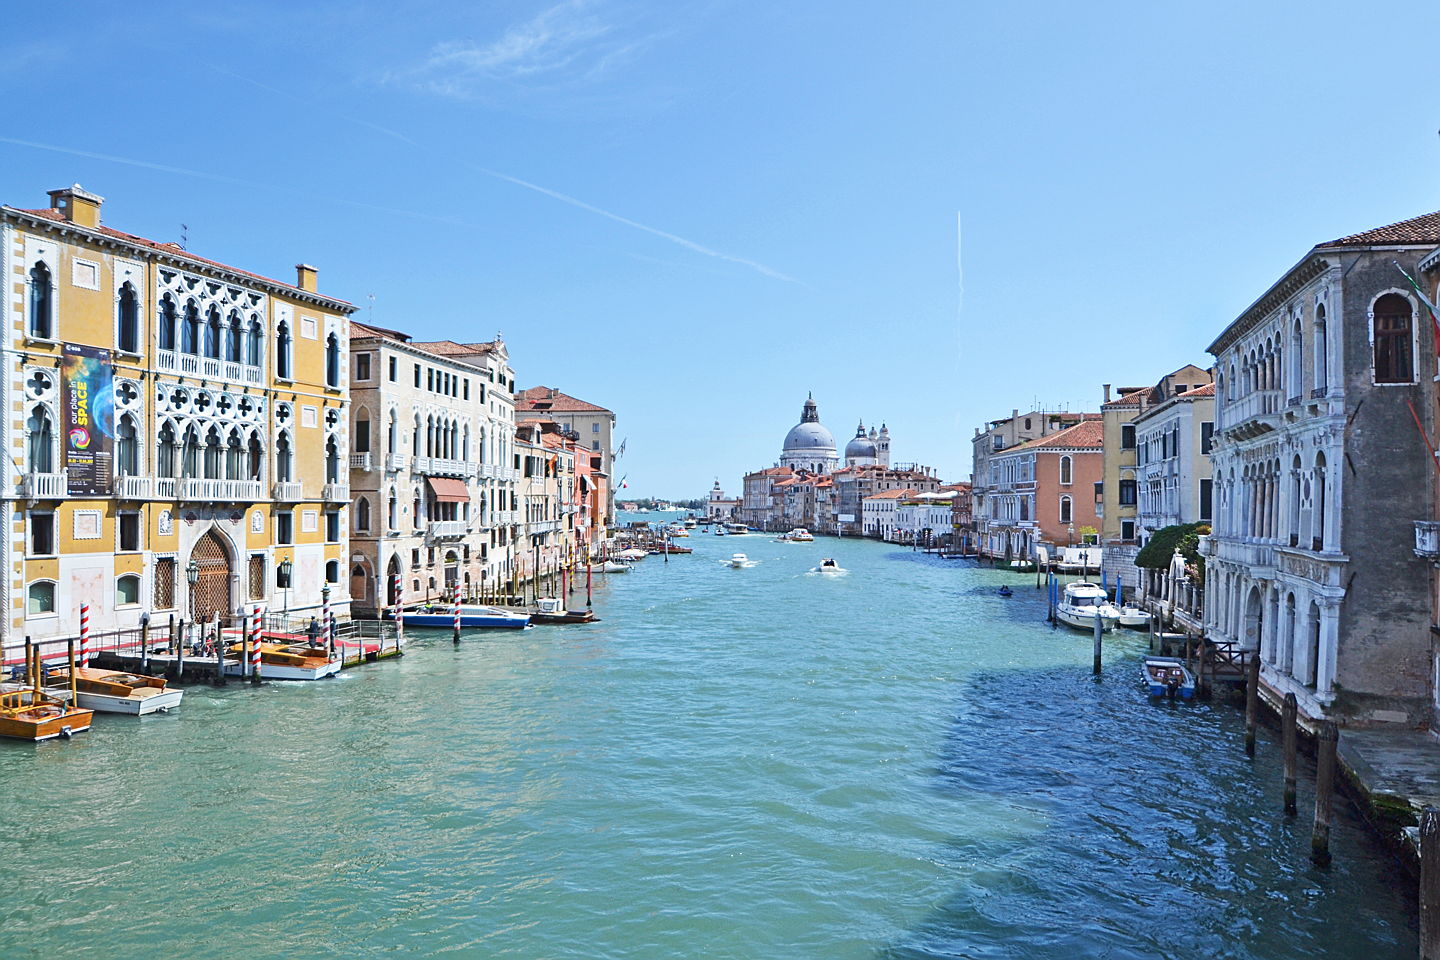  Venedig
- salute.jpg